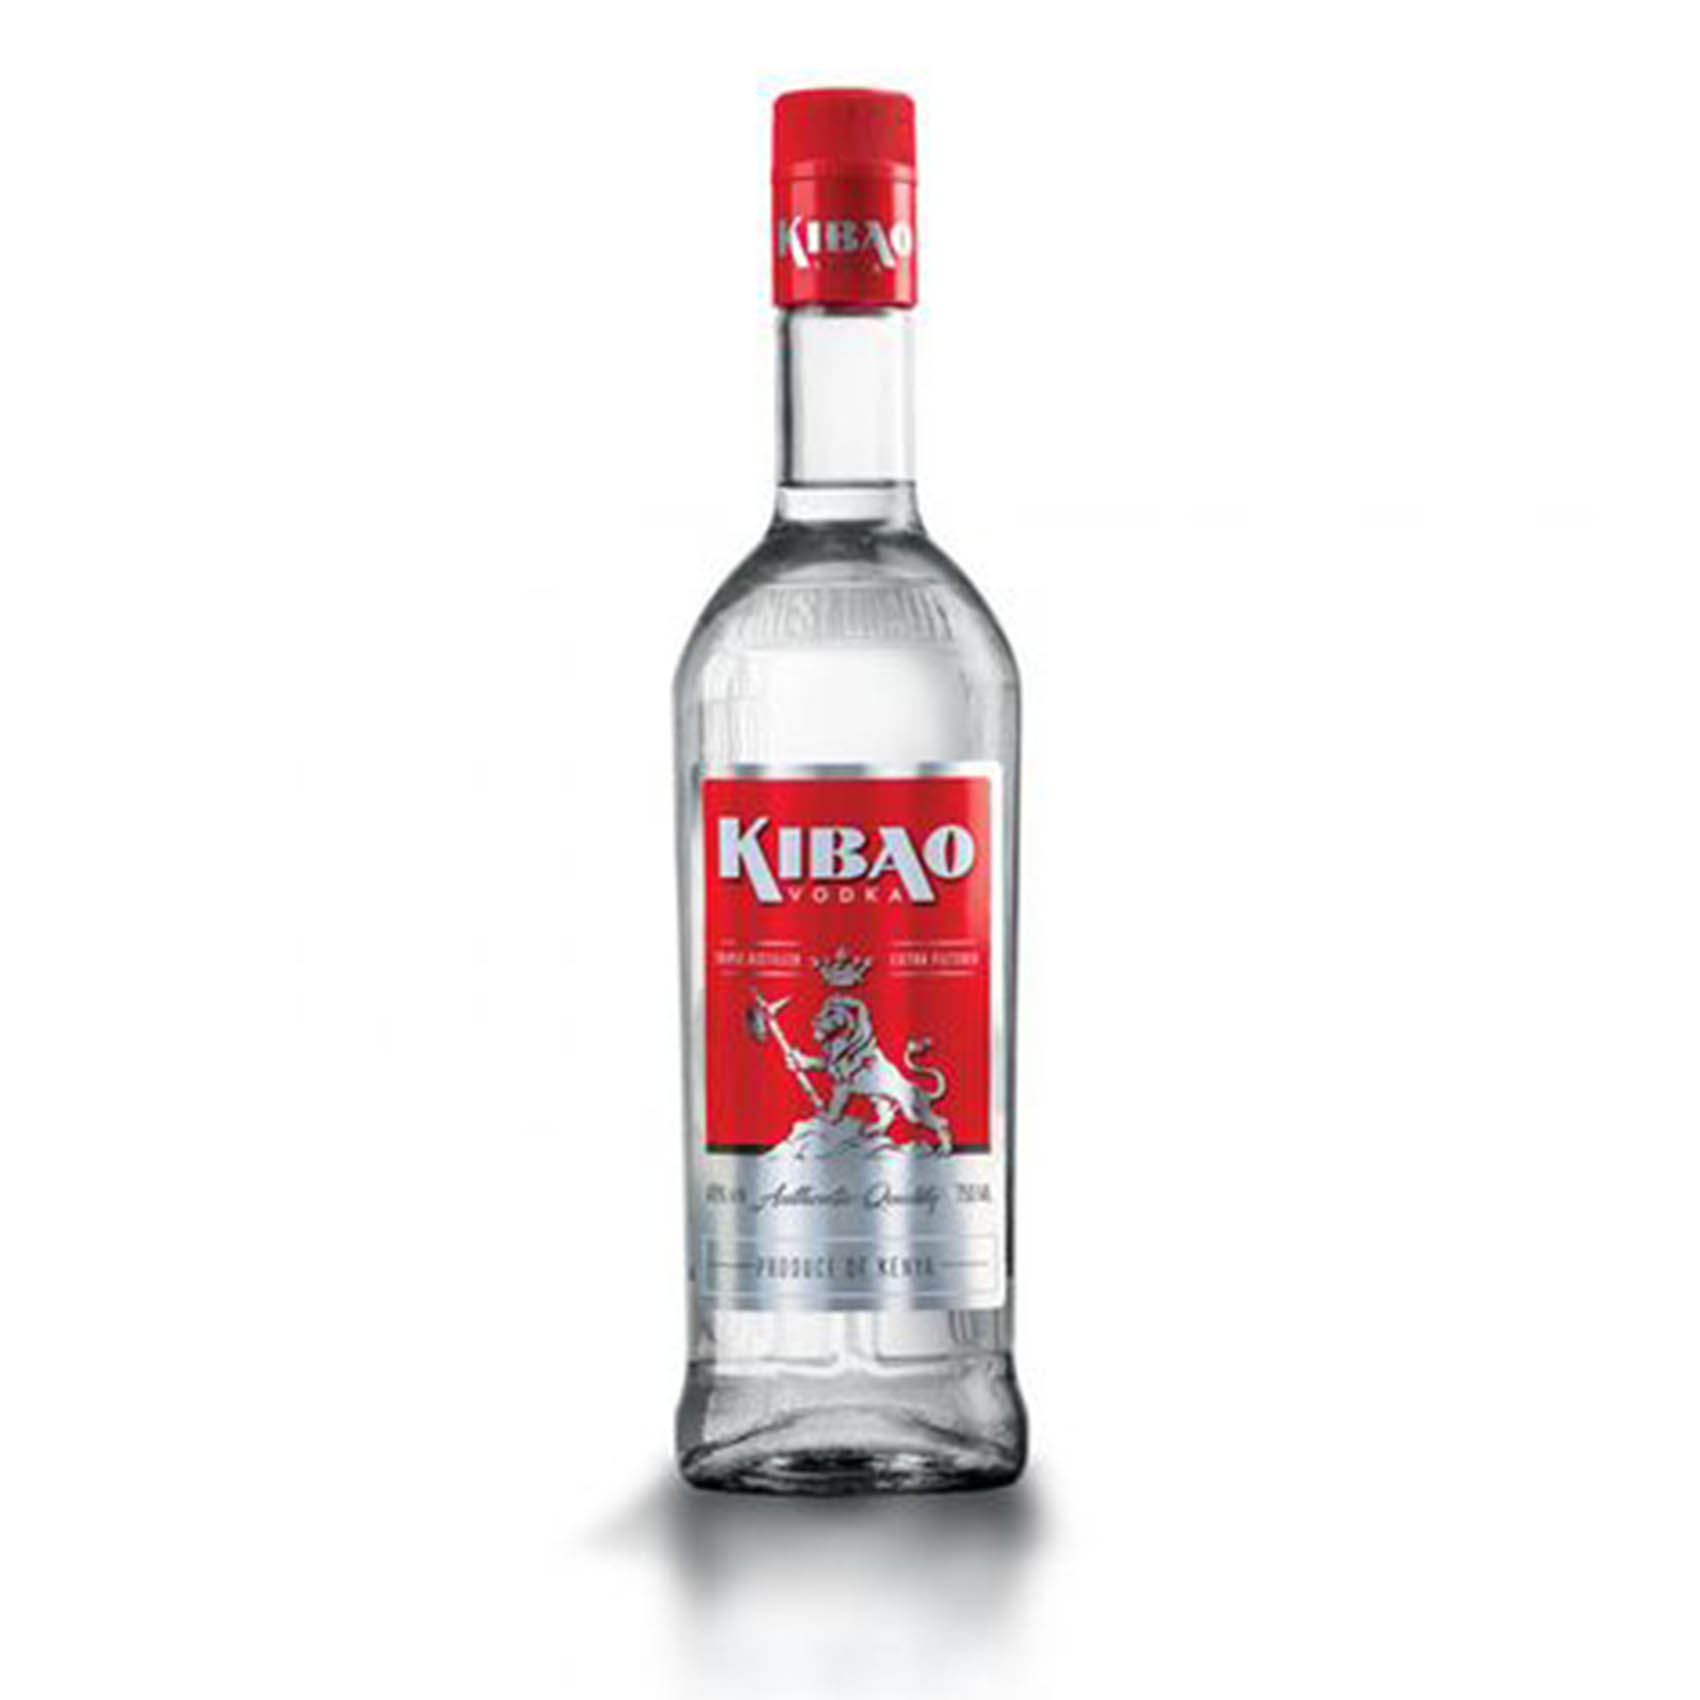 Kibao Vodka 750Ml